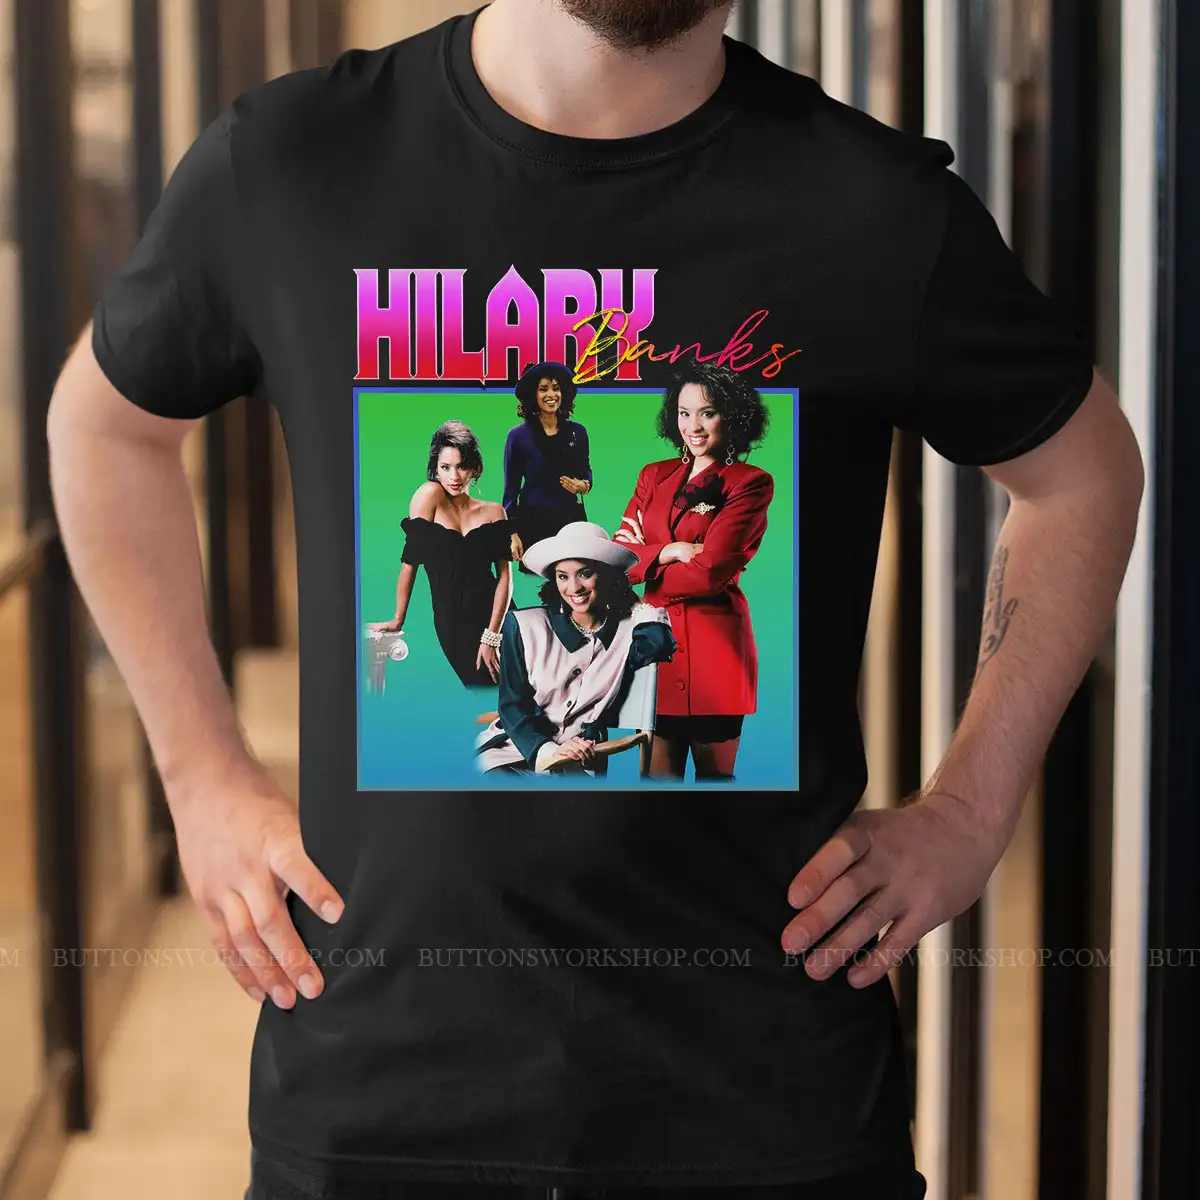 Hilary Banks T-Shirt Unisex Tshirt